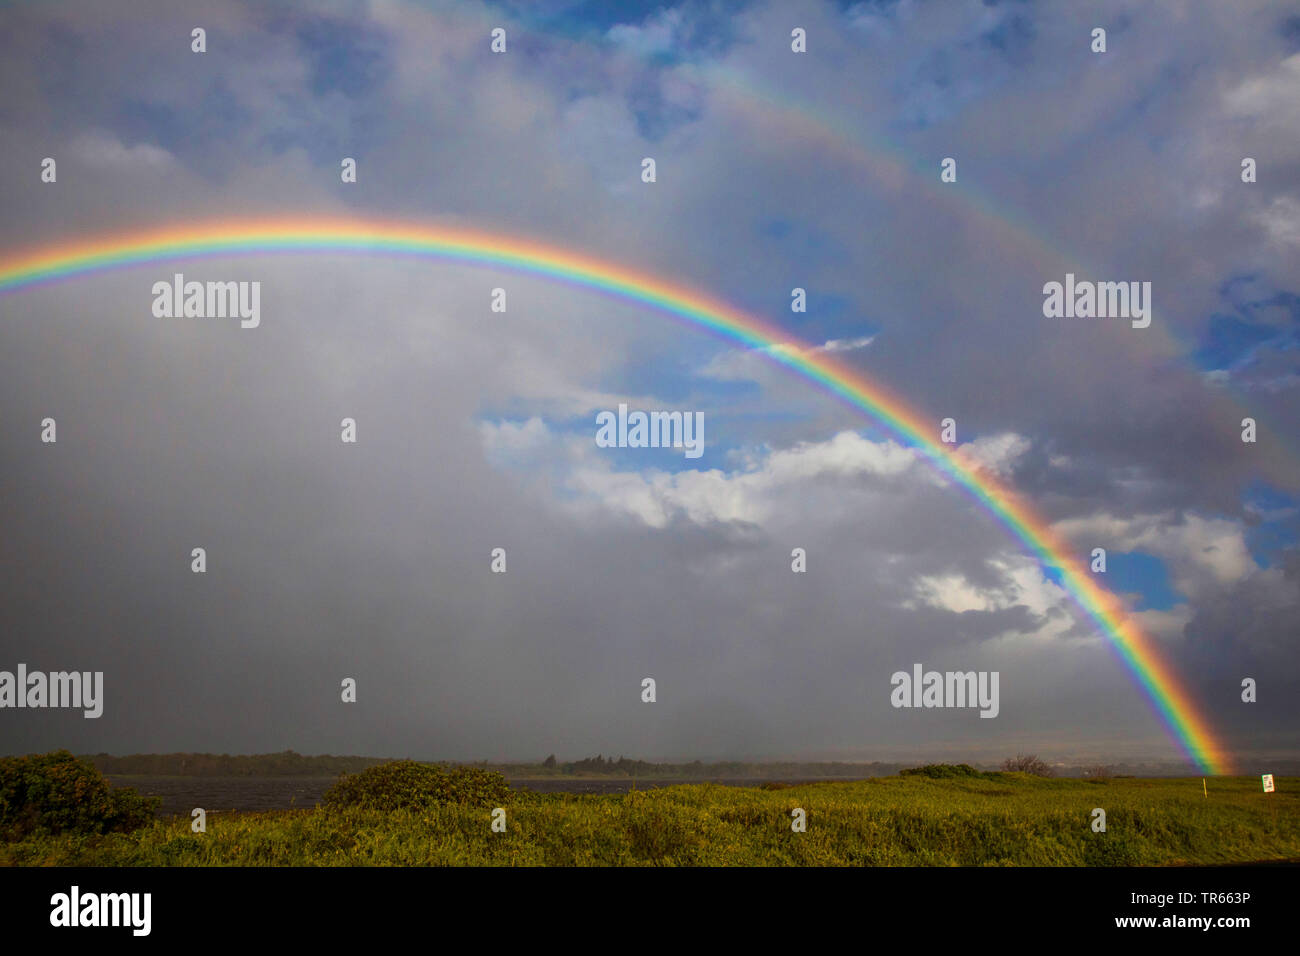 Nube e doppio arcobaleno su prati di sale, STATI UNITI D'AMERICA, Hawaii, Kealia Pond, Kihei Foto Stock